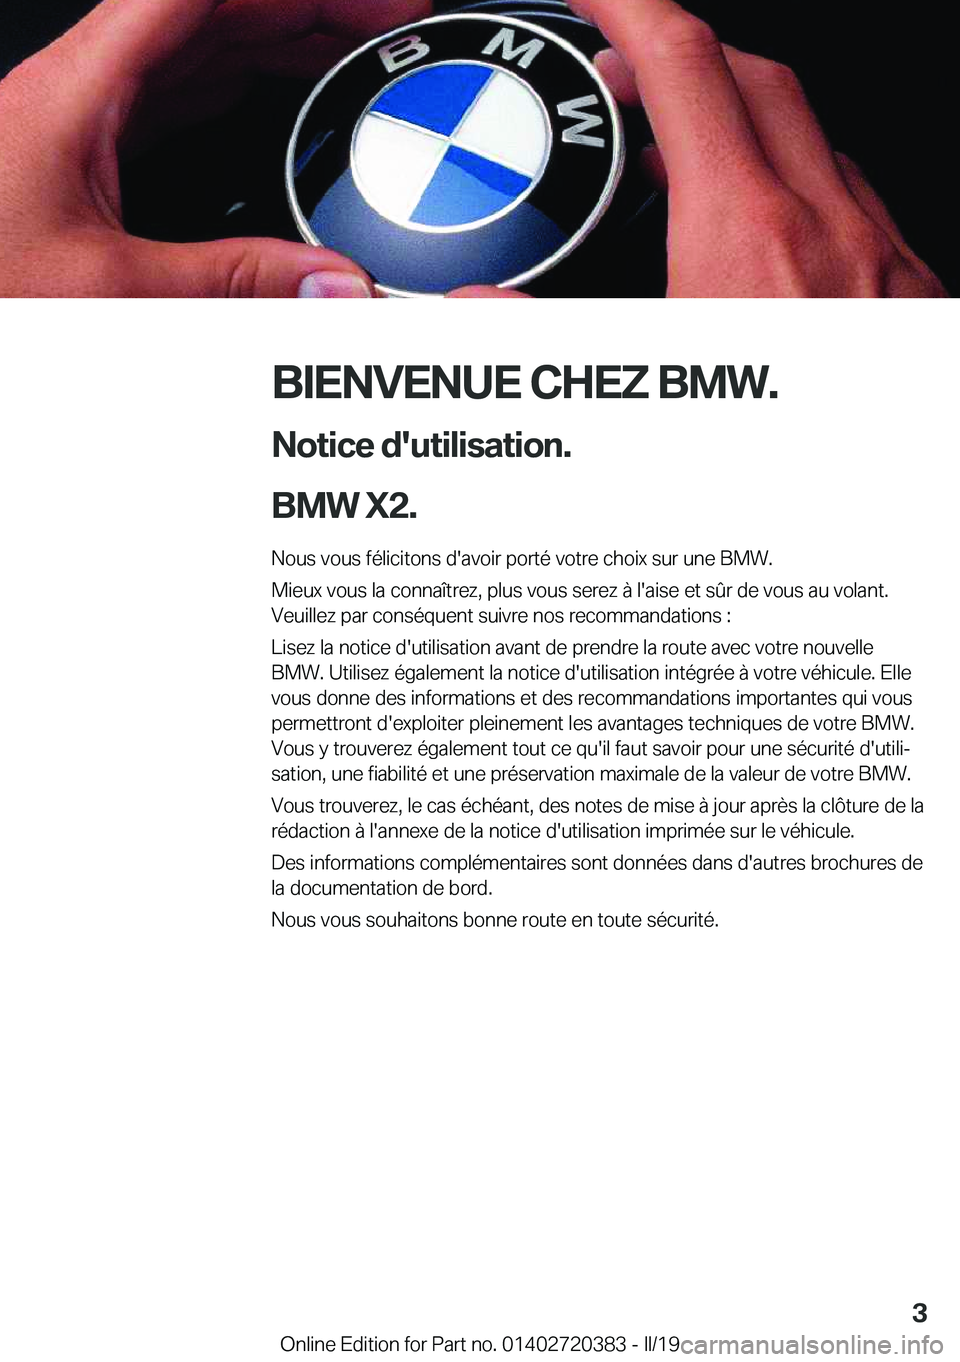 BMW X2 2019  Notices Demploi (in French) �B�I�E�N�V�E�N�U�E��C�H�E�Z��B�M�W�.�N�o�t�i�c�e��d�'�u�t�i�l�i�s�a�t�i�o�n�.
�B�M�W��X�2�. �N�o�u�s��v�o�u�s��f�é�l�i�c�i�t�o�n�s��d�'�a�v�o�i�r��p�o�r�t�é��v�o�t�r�e��c�h�o�i�x�